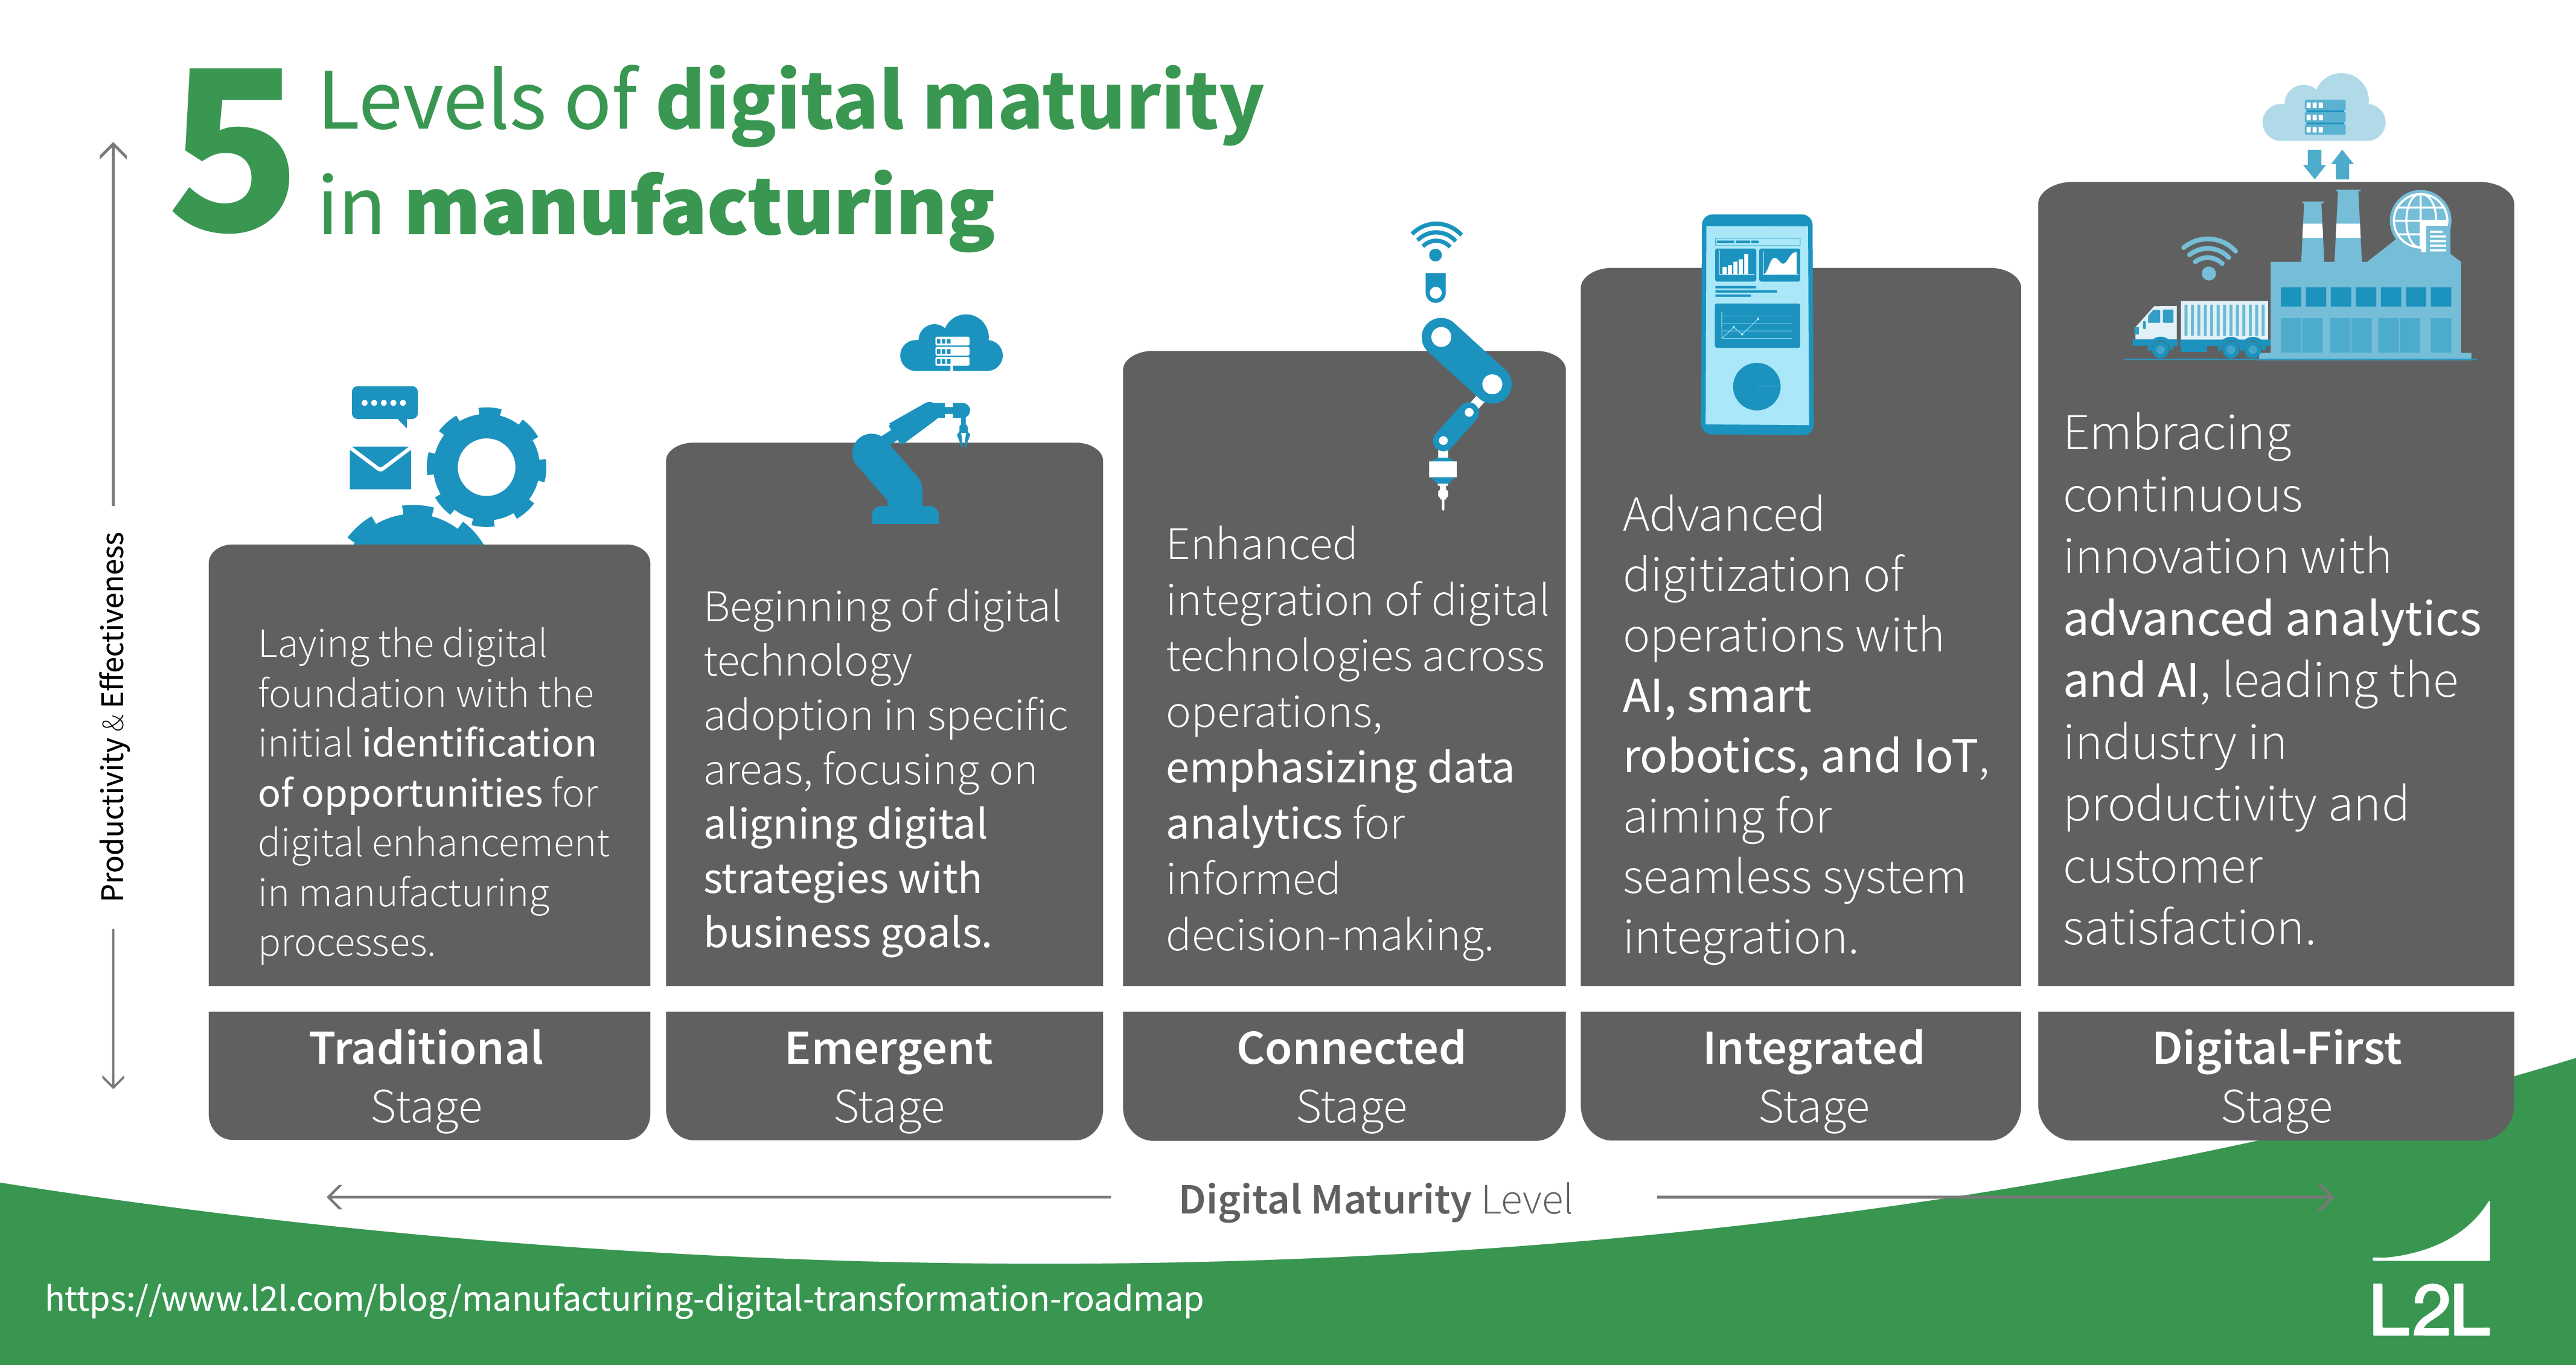 5 Levels of Digital Maturity in Manufacturing